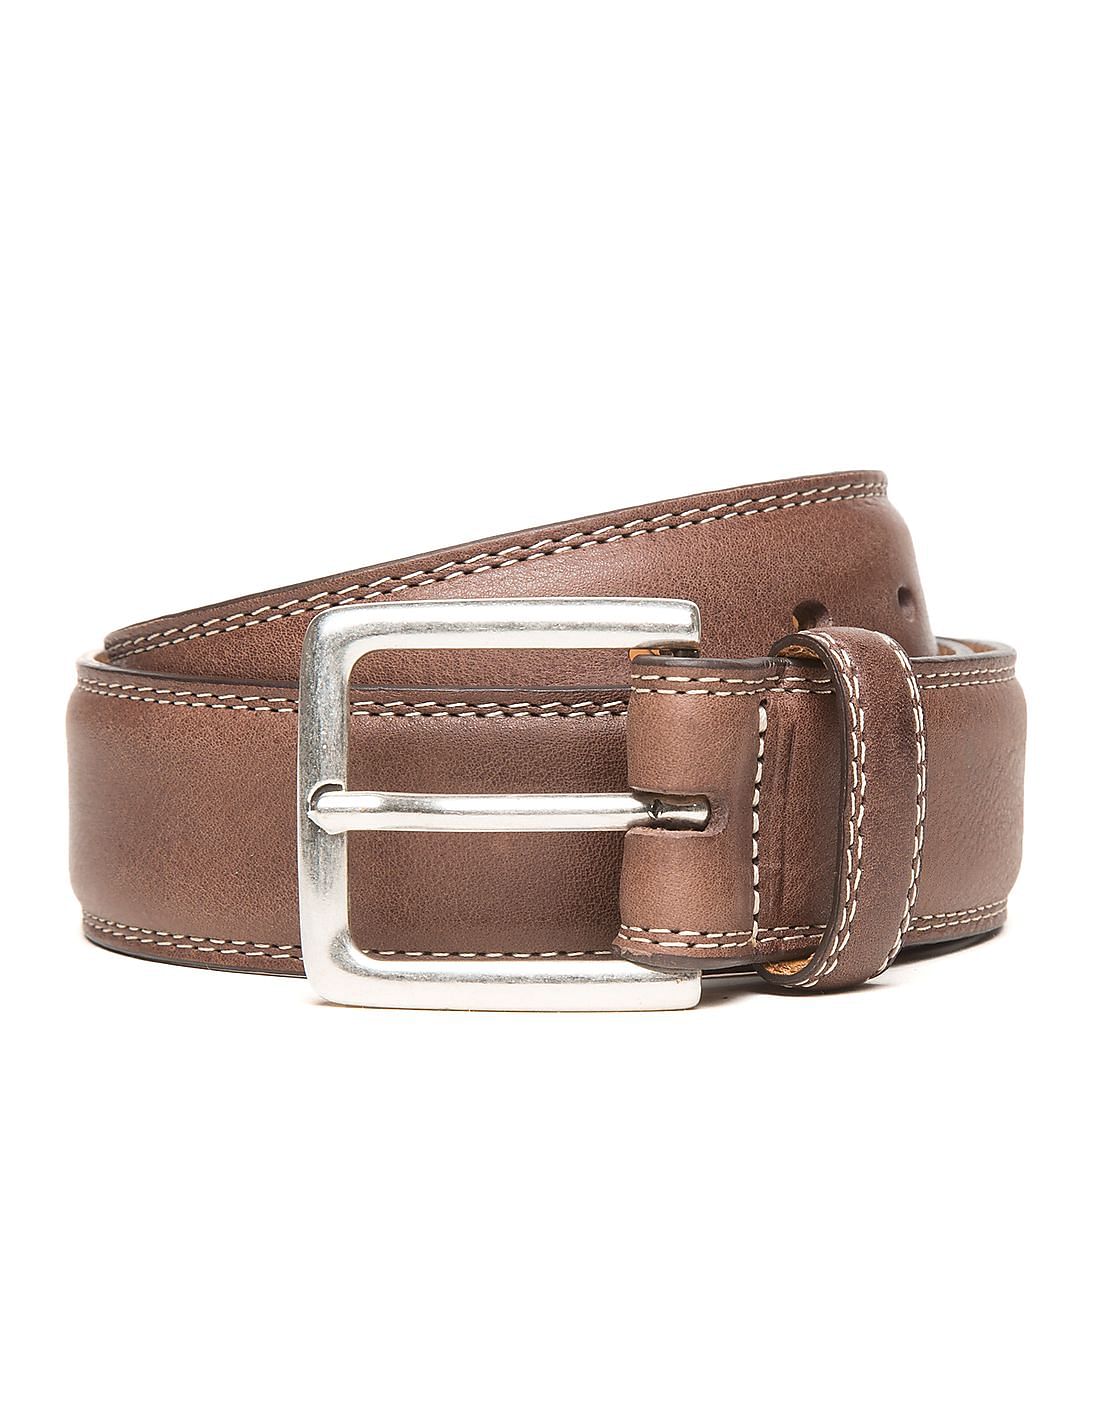 Buy Gant Men Grained Leather Belt - NNNOW.com